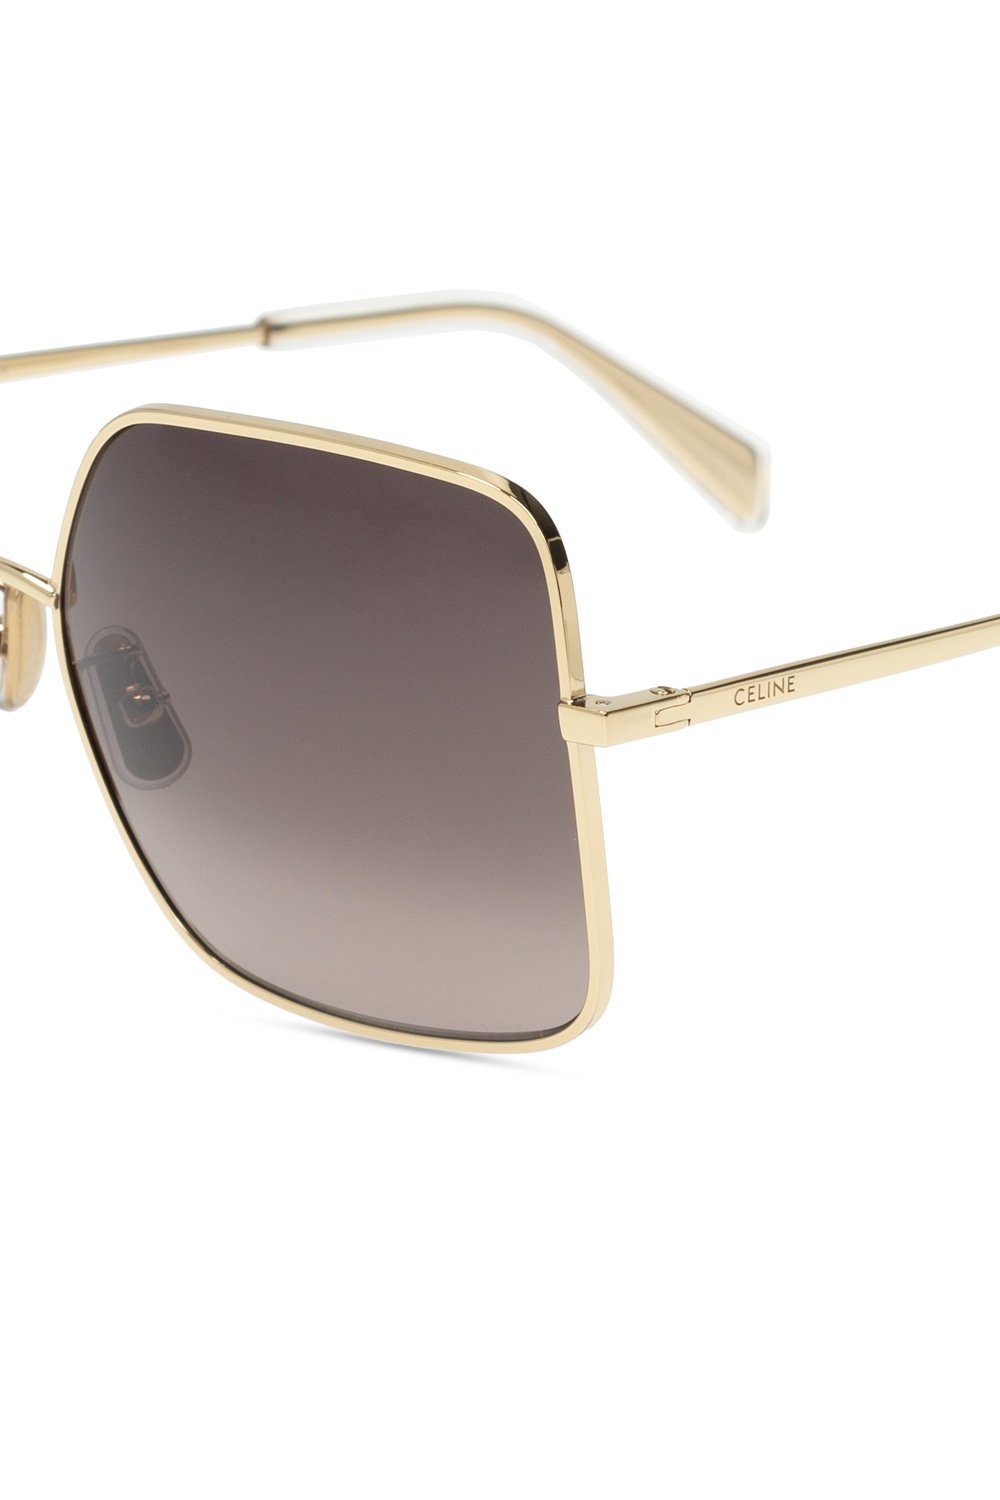 Celine Logo-embossed sunglasses